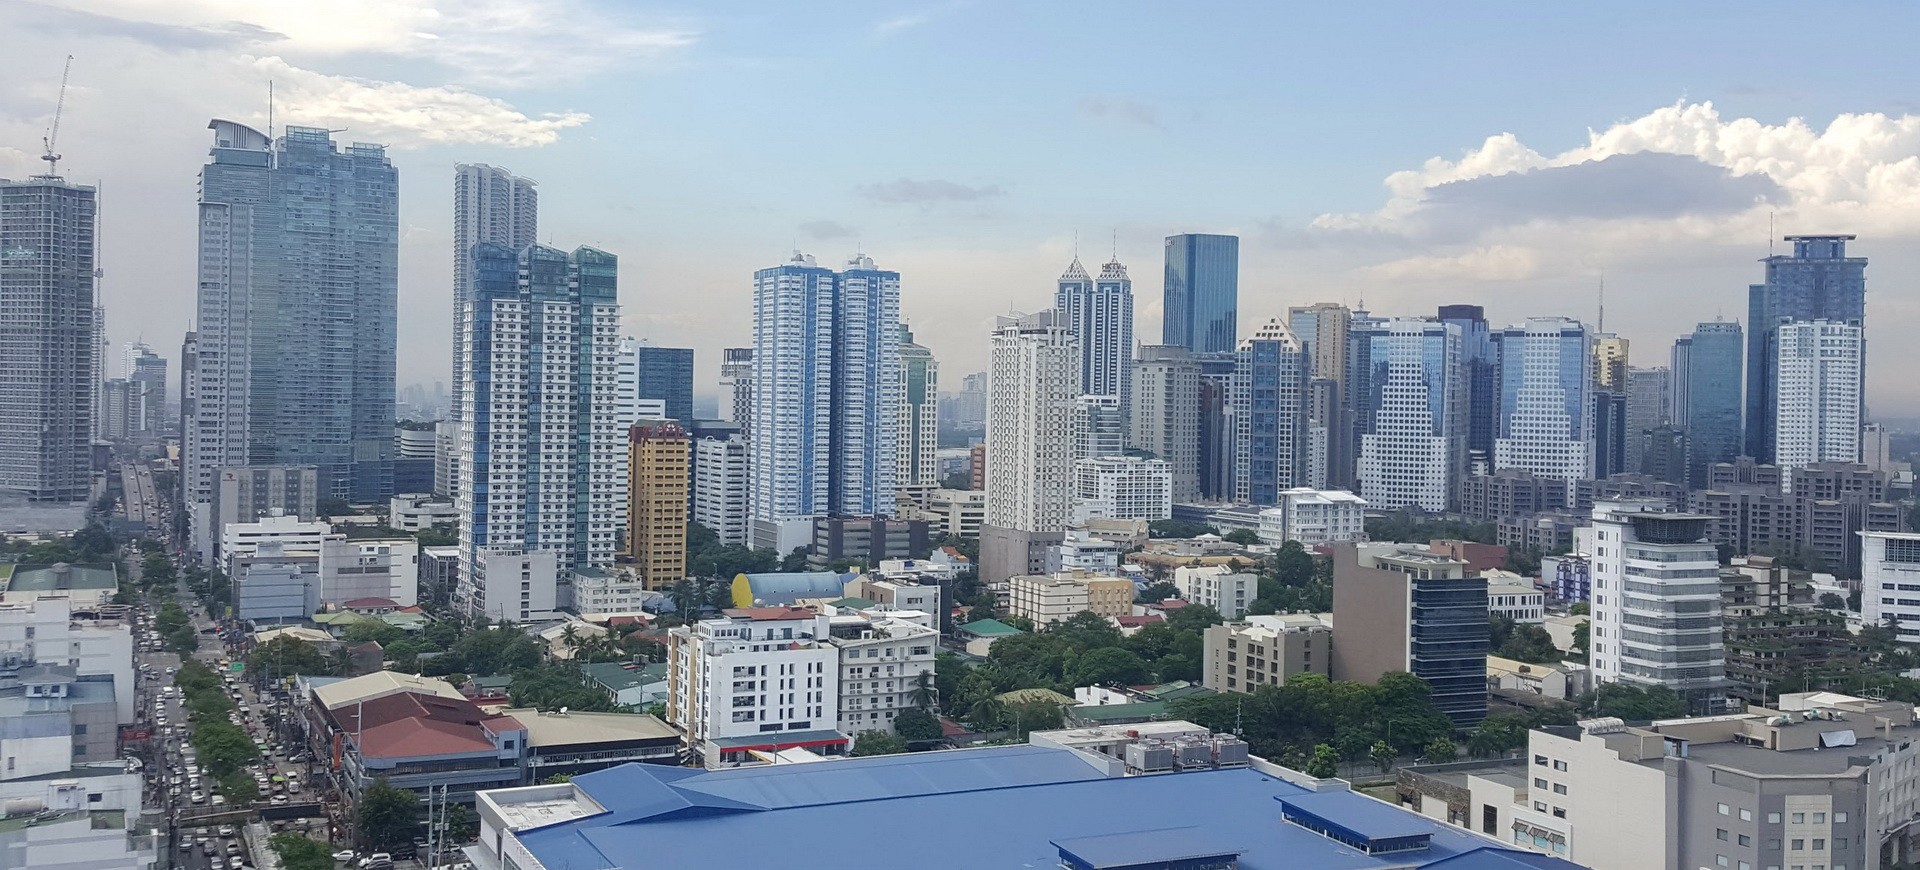 Philippines Manille la Capitale vue panoramique